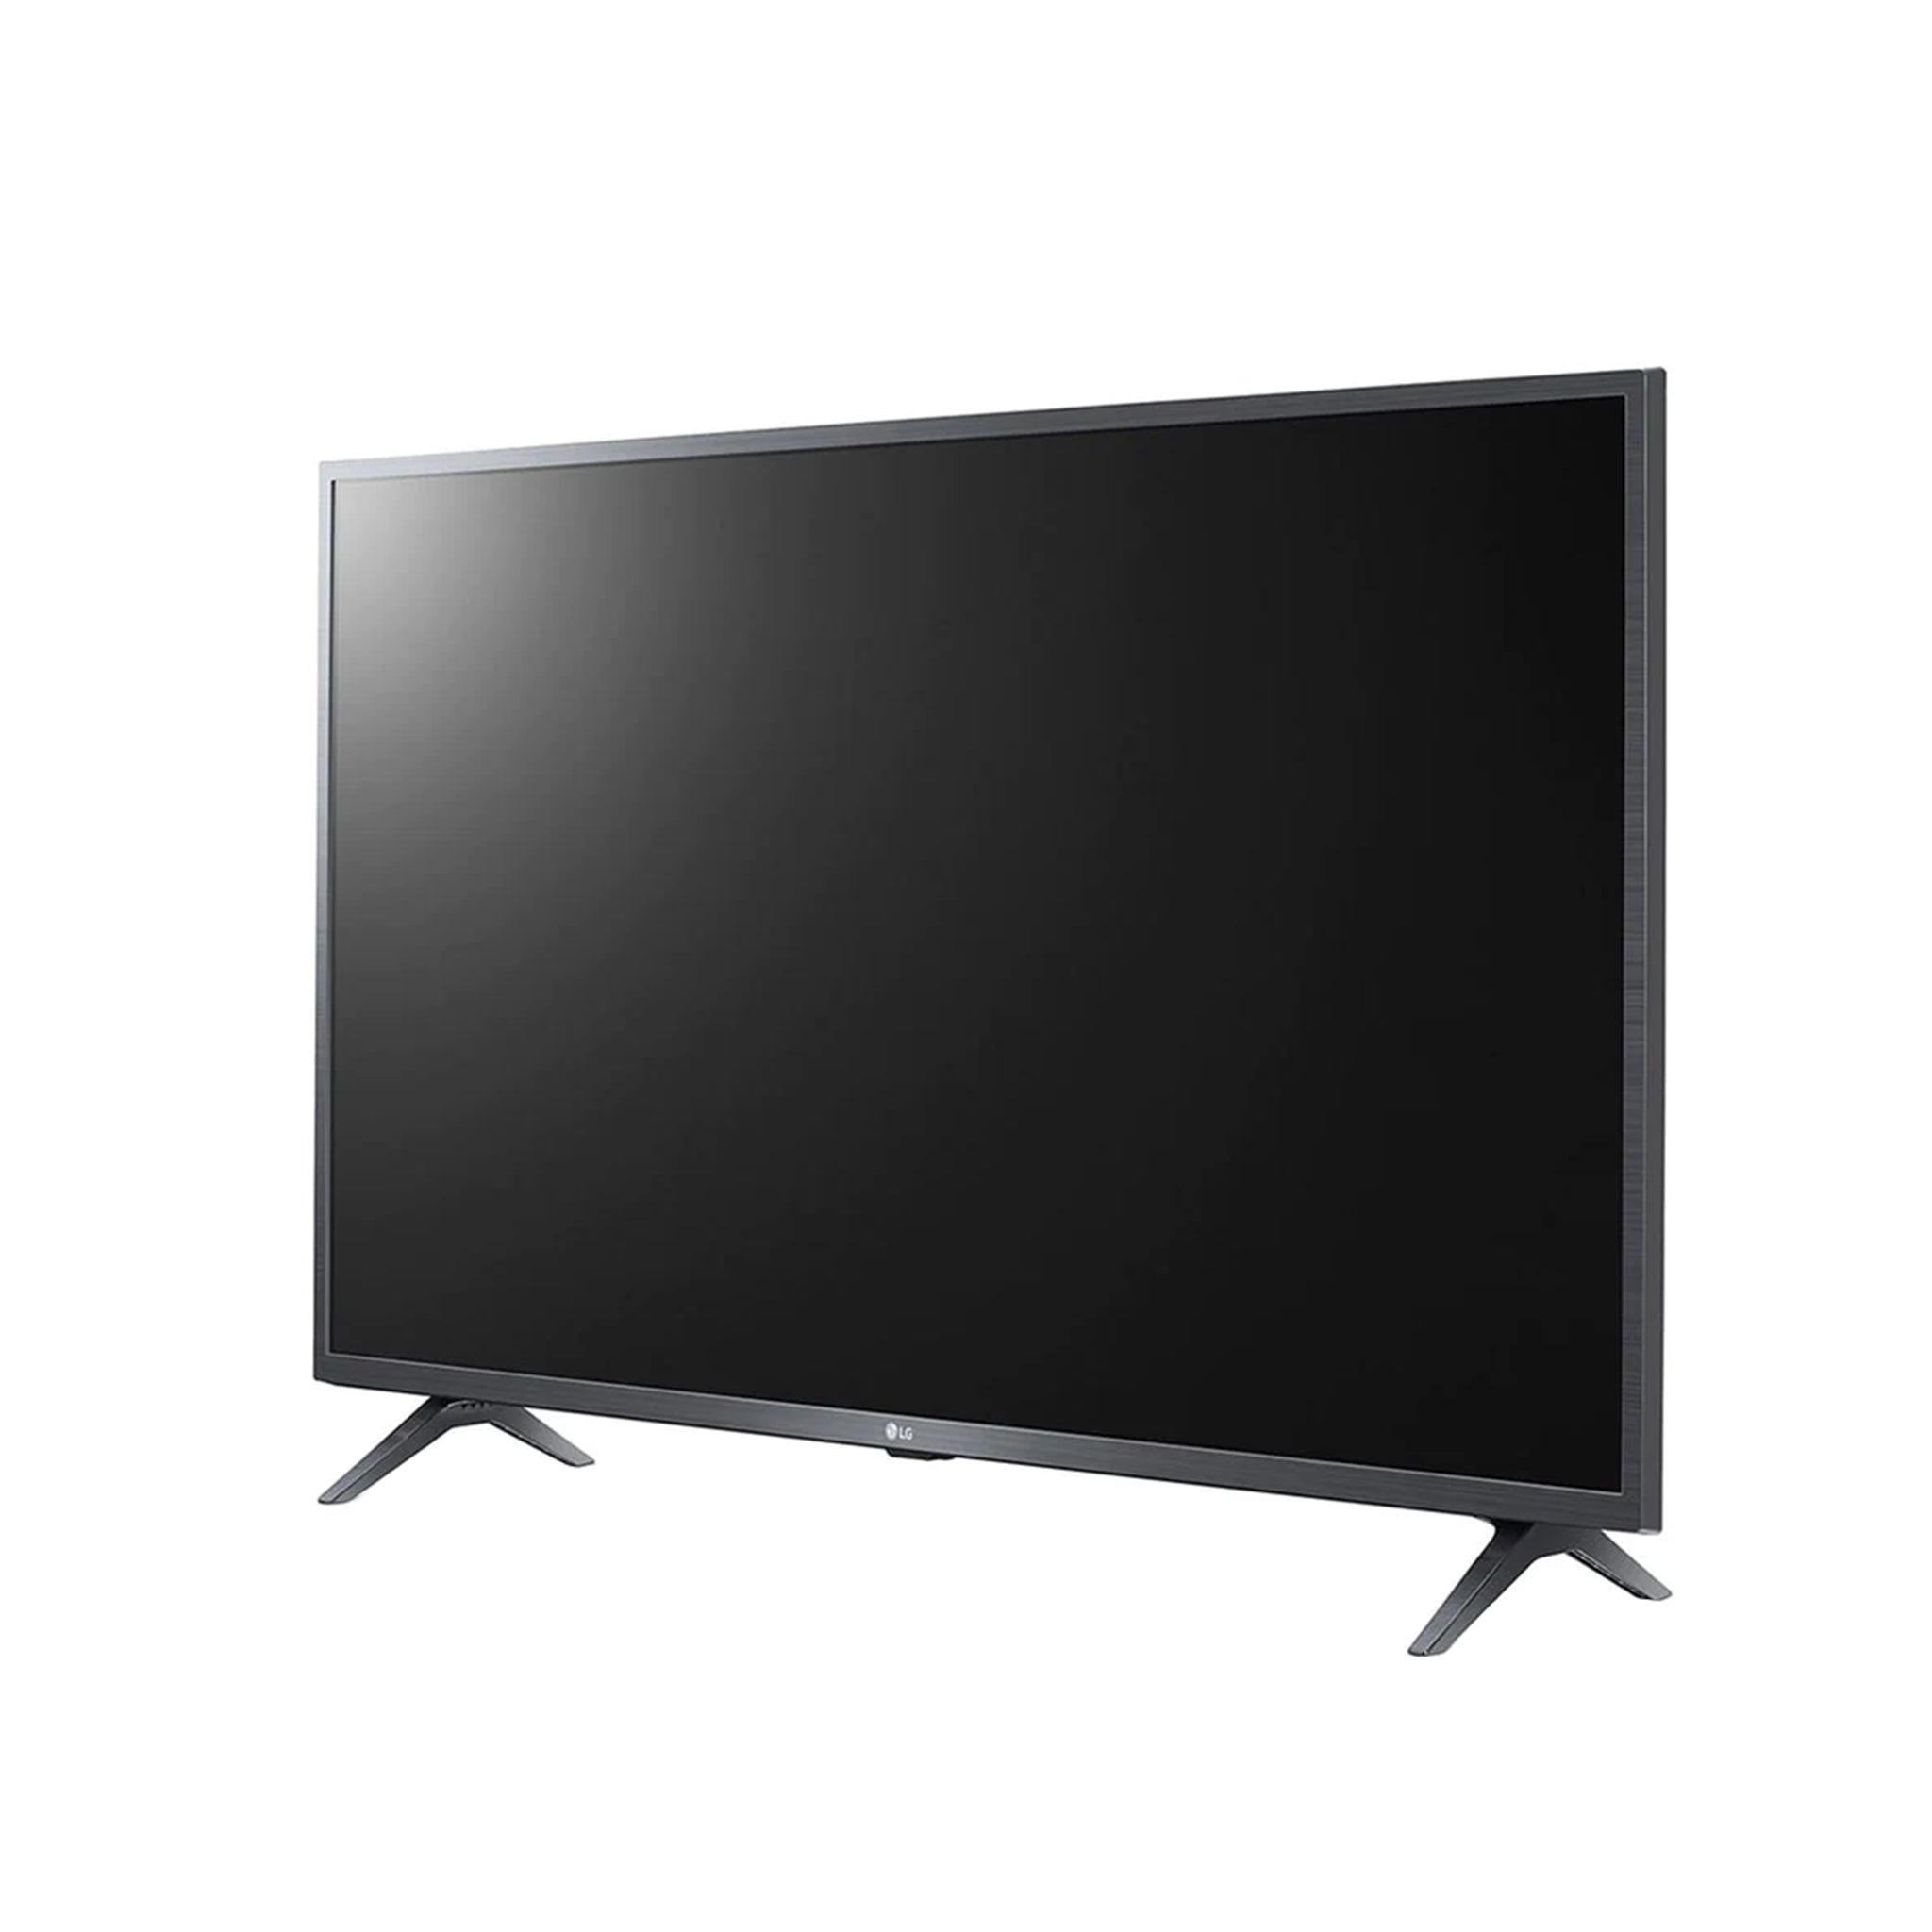 LG TV 19FHD SMART 43LM6300PVB.AFKE